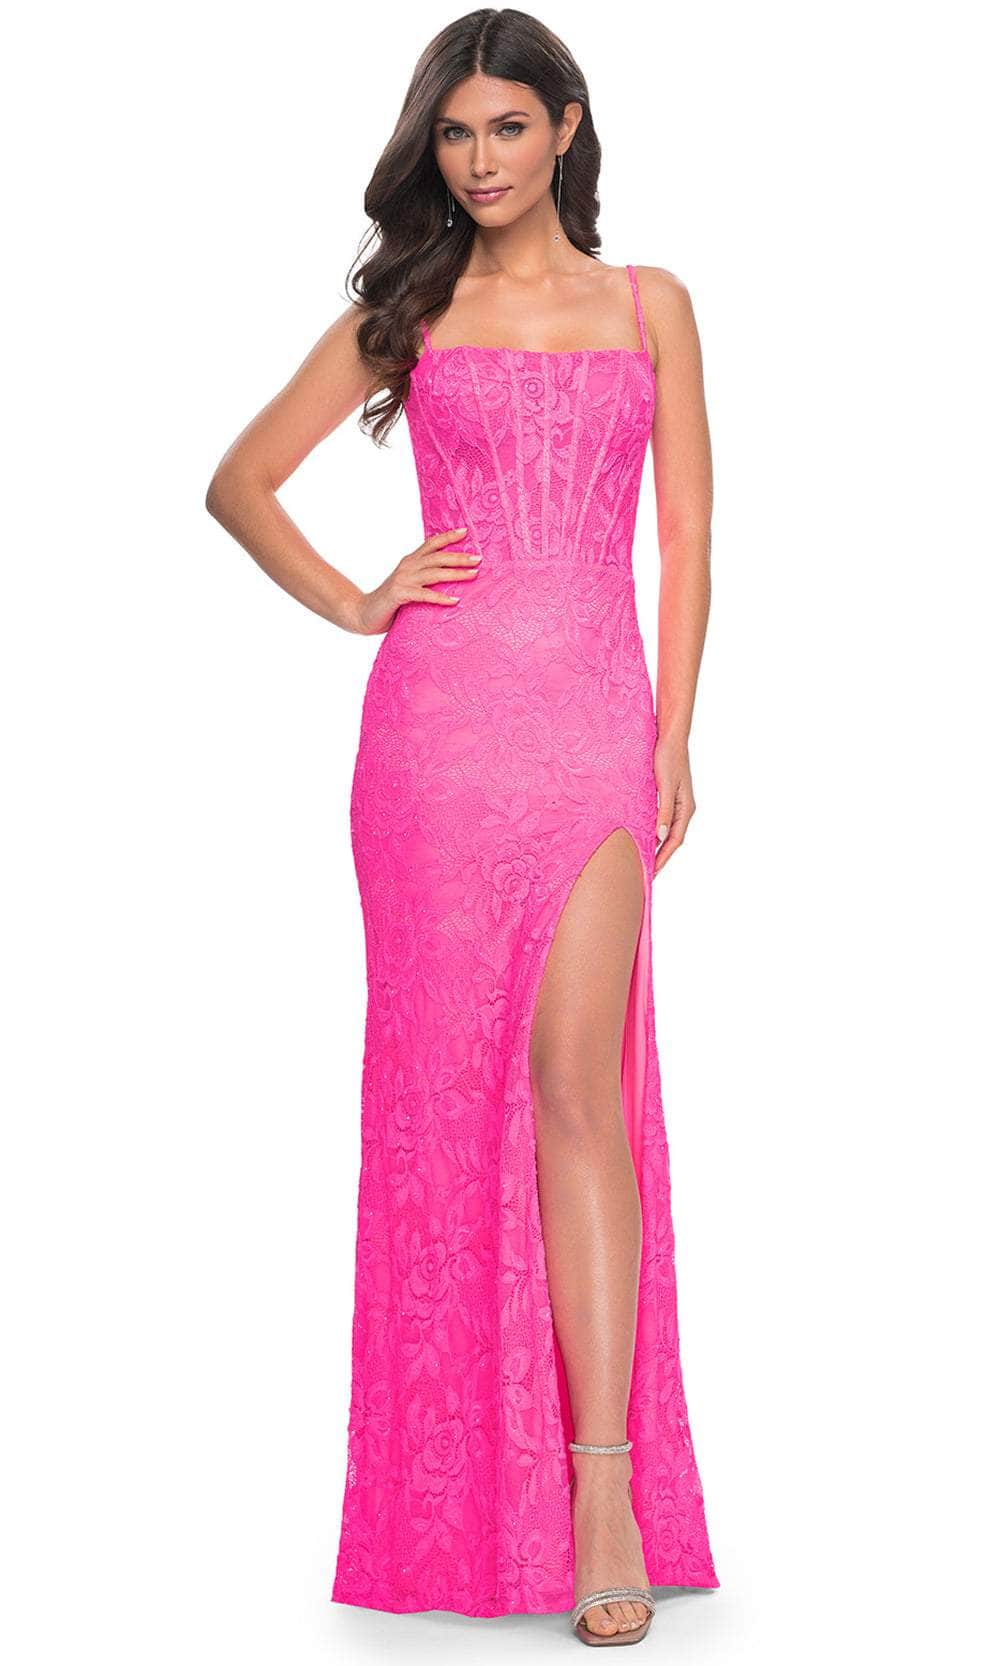 La Femme 32423 - Lace Spaghetti Strap Prom Dress
